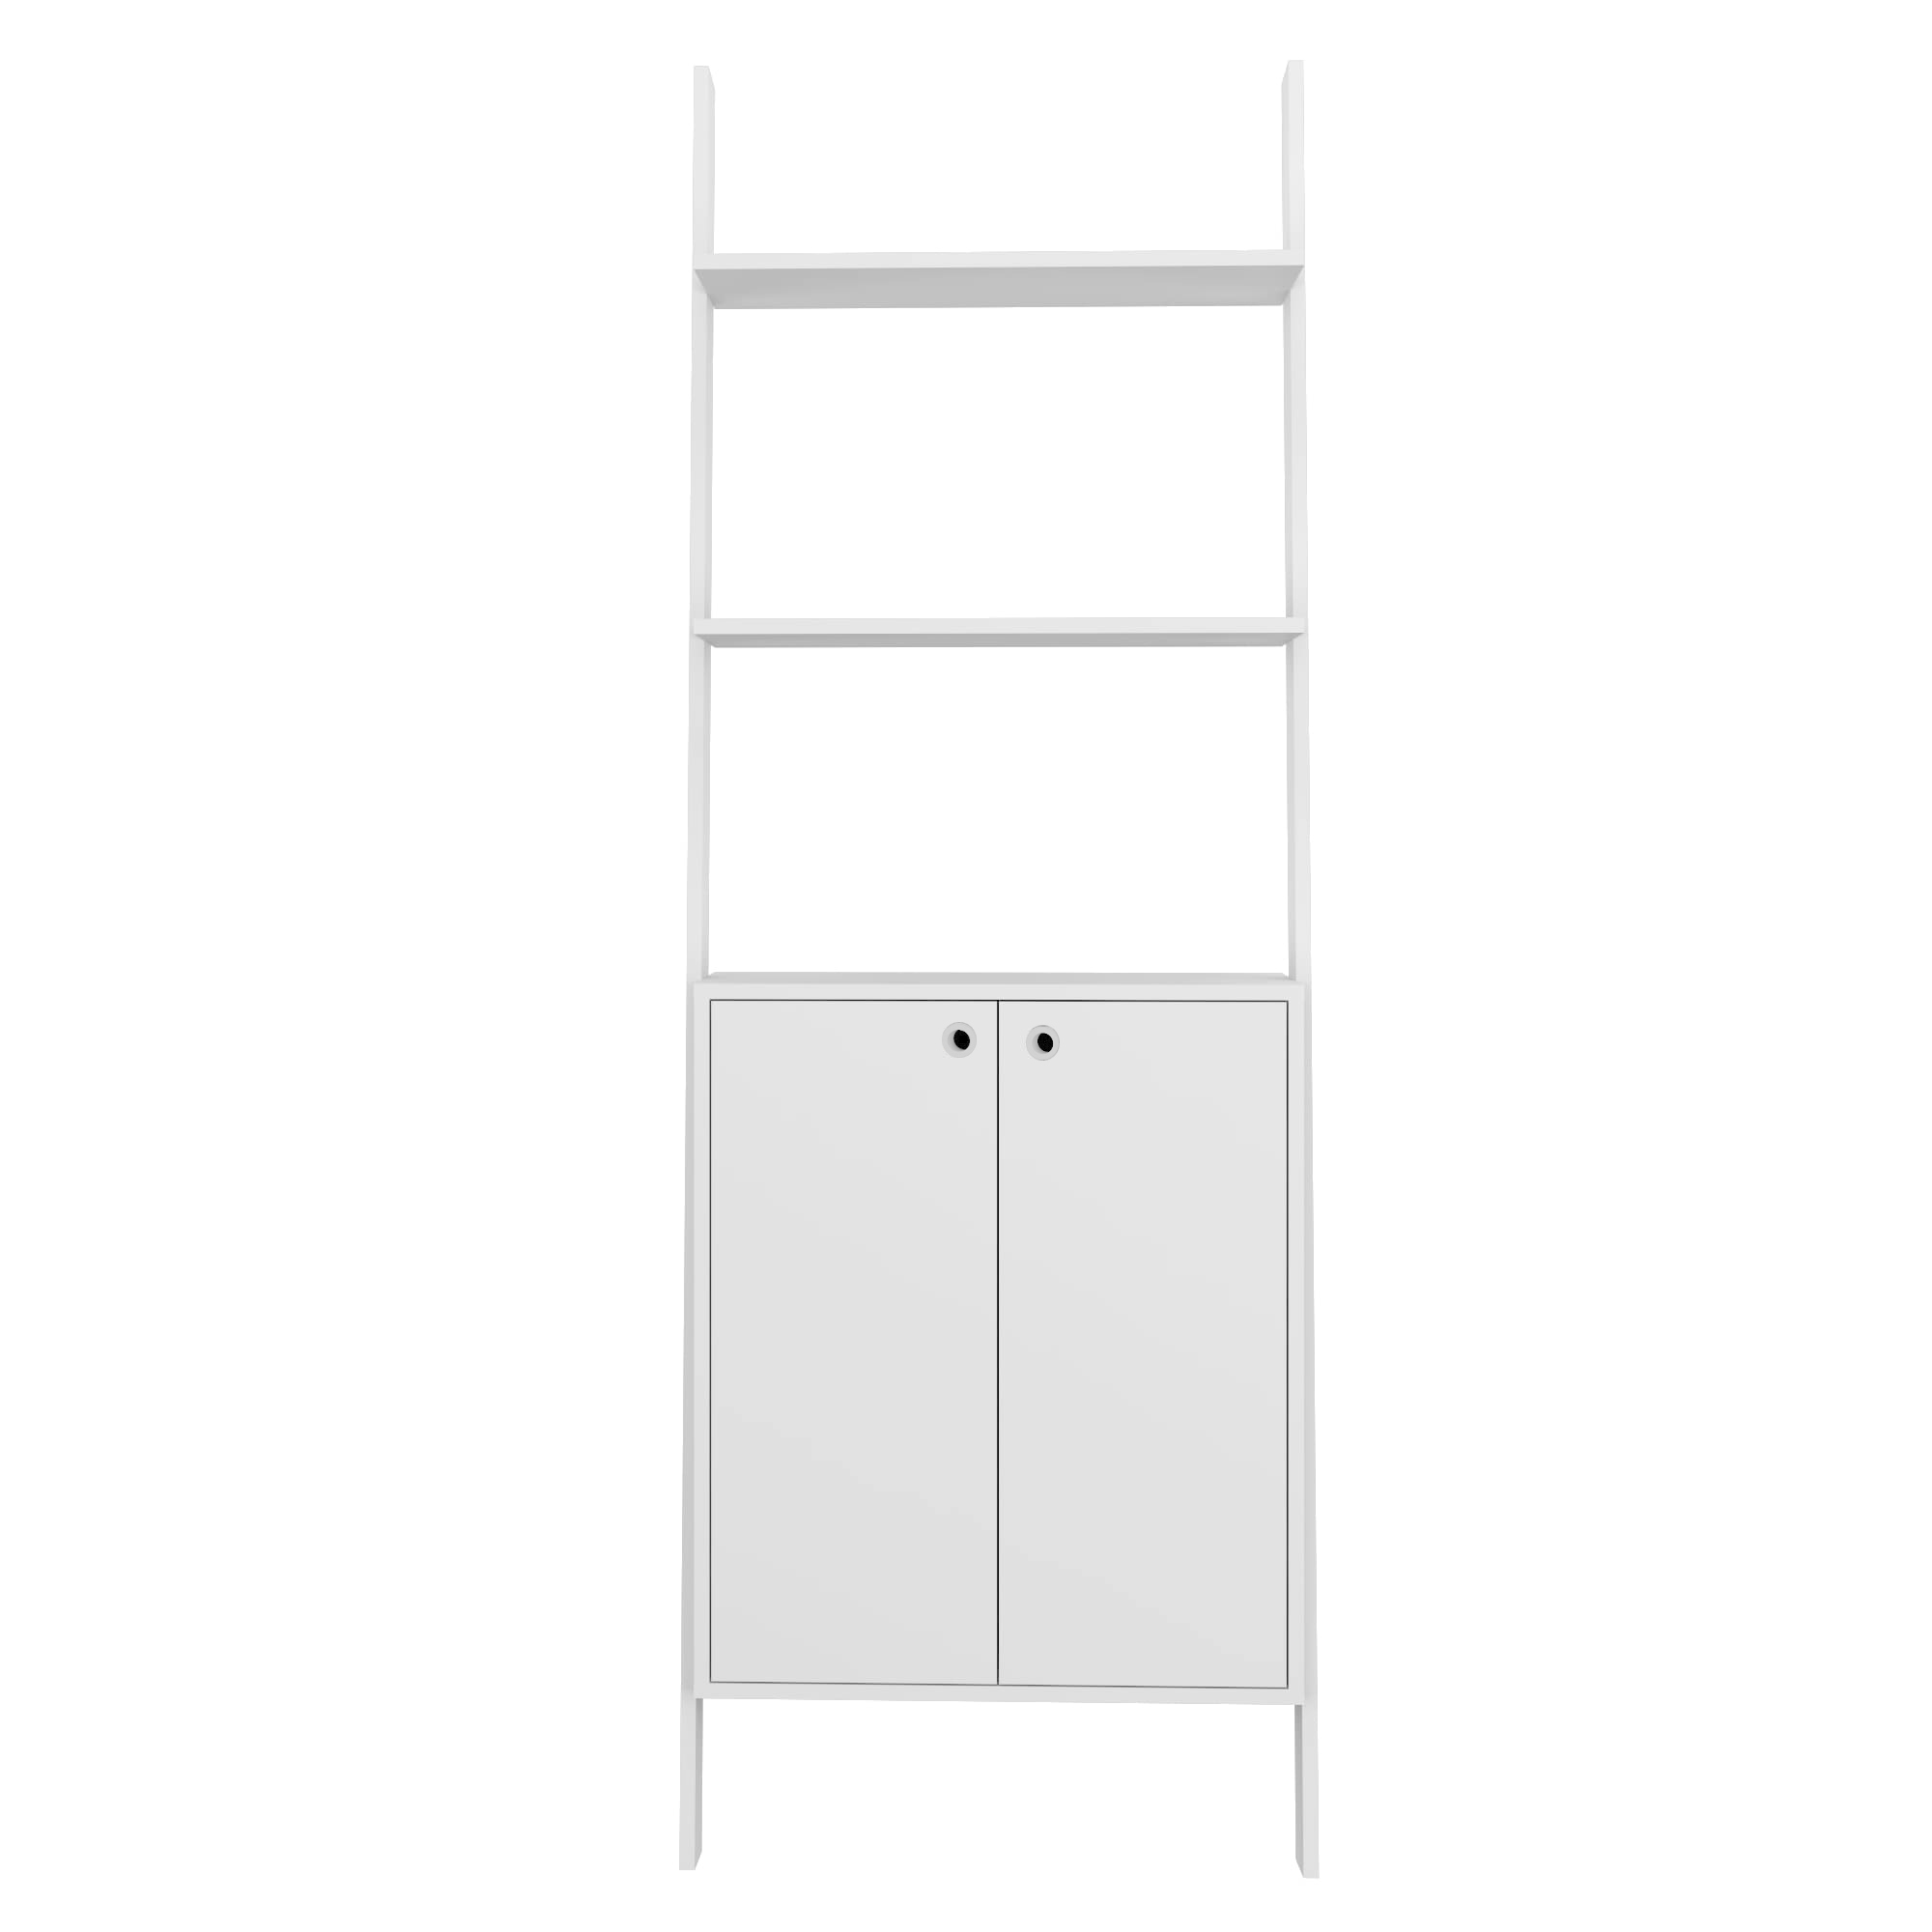 Manhattan Comfort, Cooper Ladder Cabinet 2 Floating Shelves White, Width 24.8 in, Height 72.04 in, Depth 9.84 in, Model 194AMC